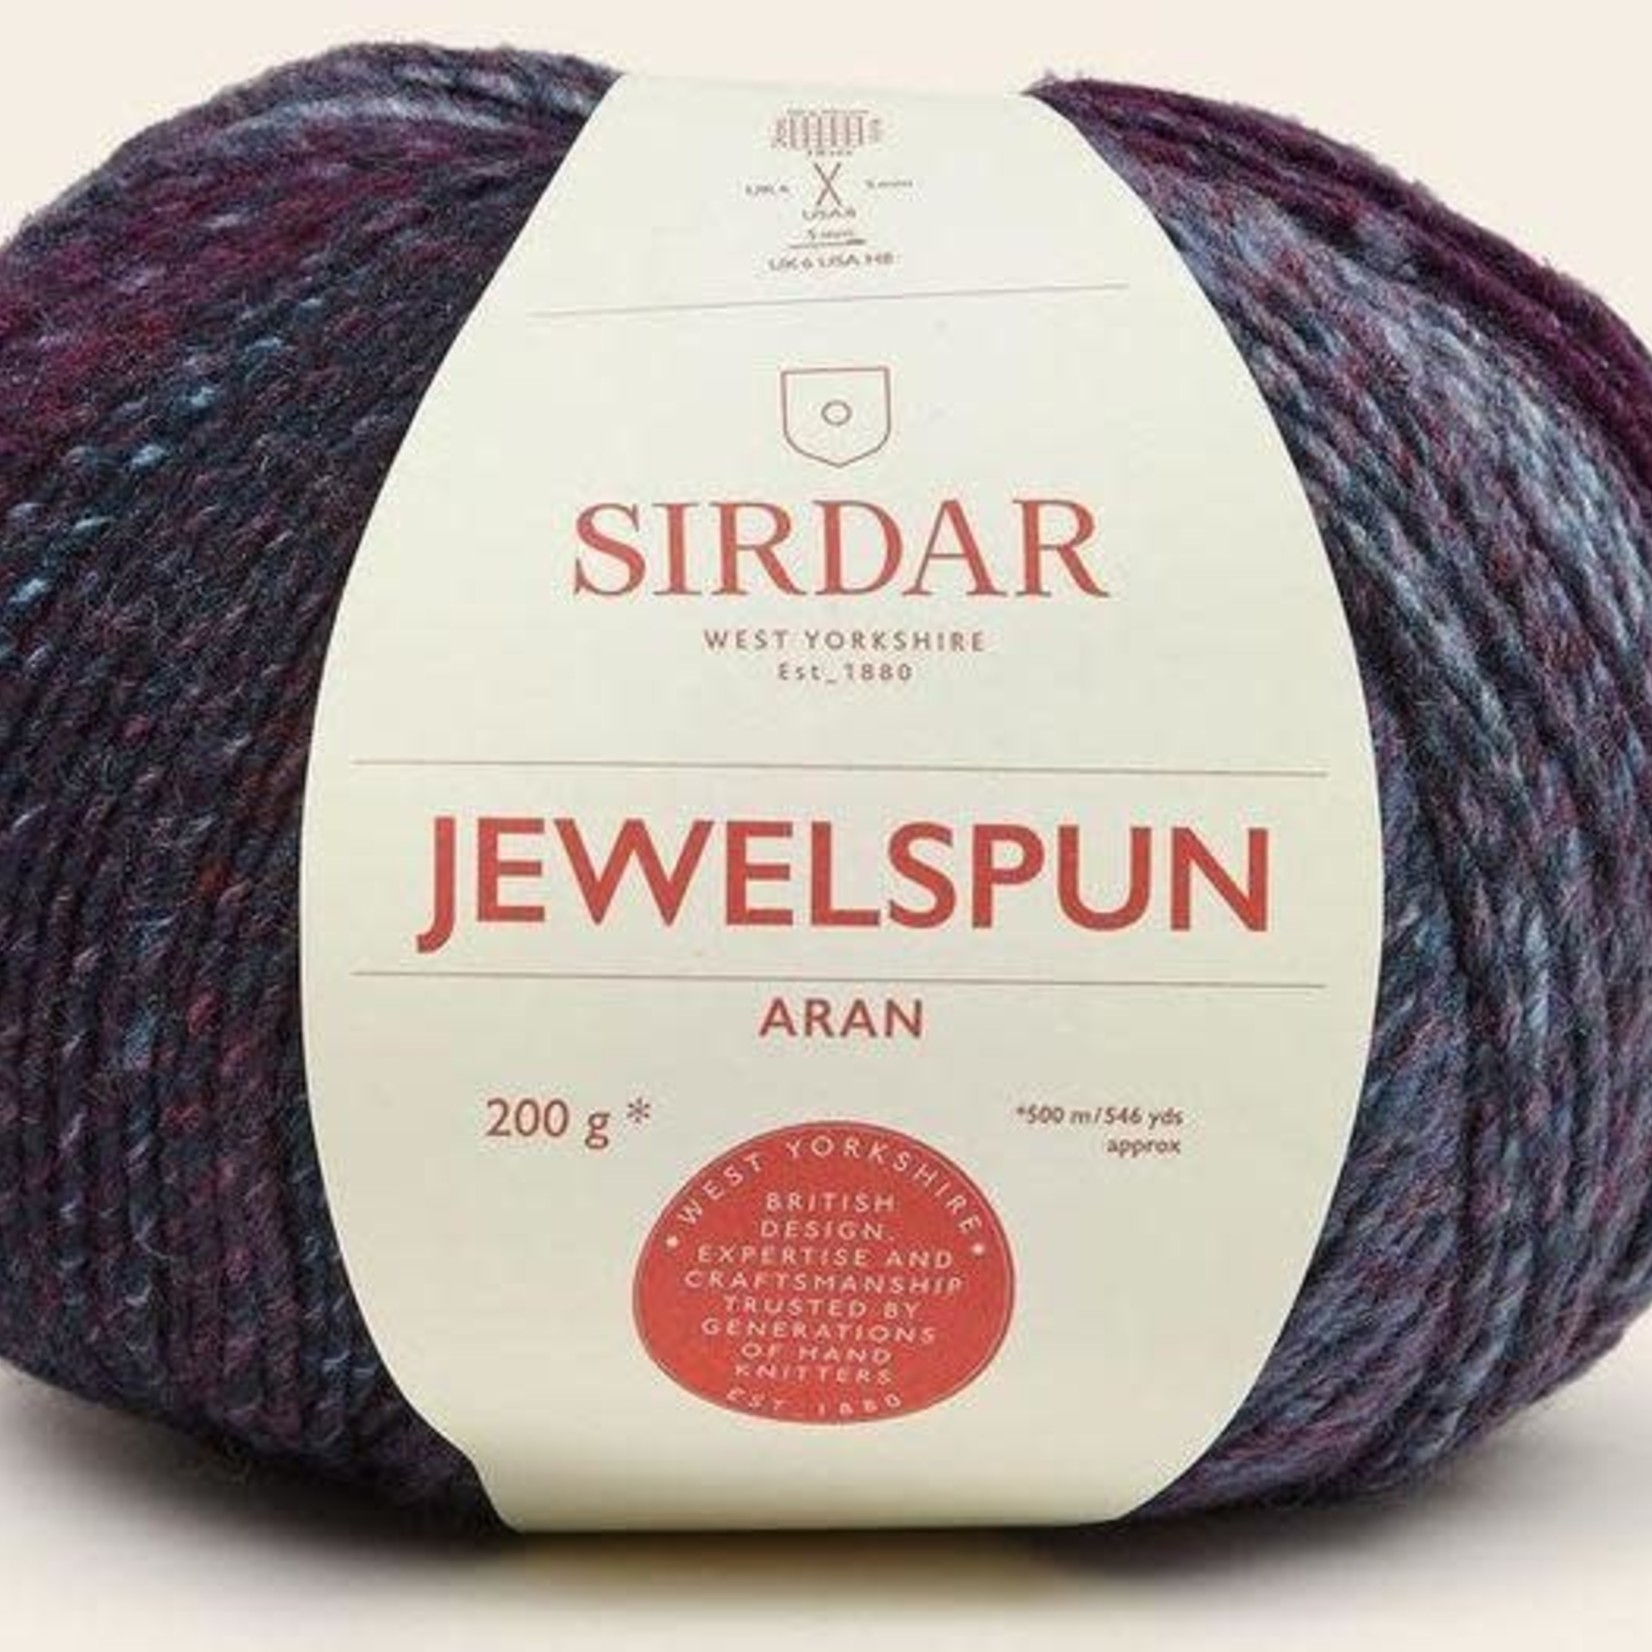 Sirdar Jewelspun (200g) by Sirdar